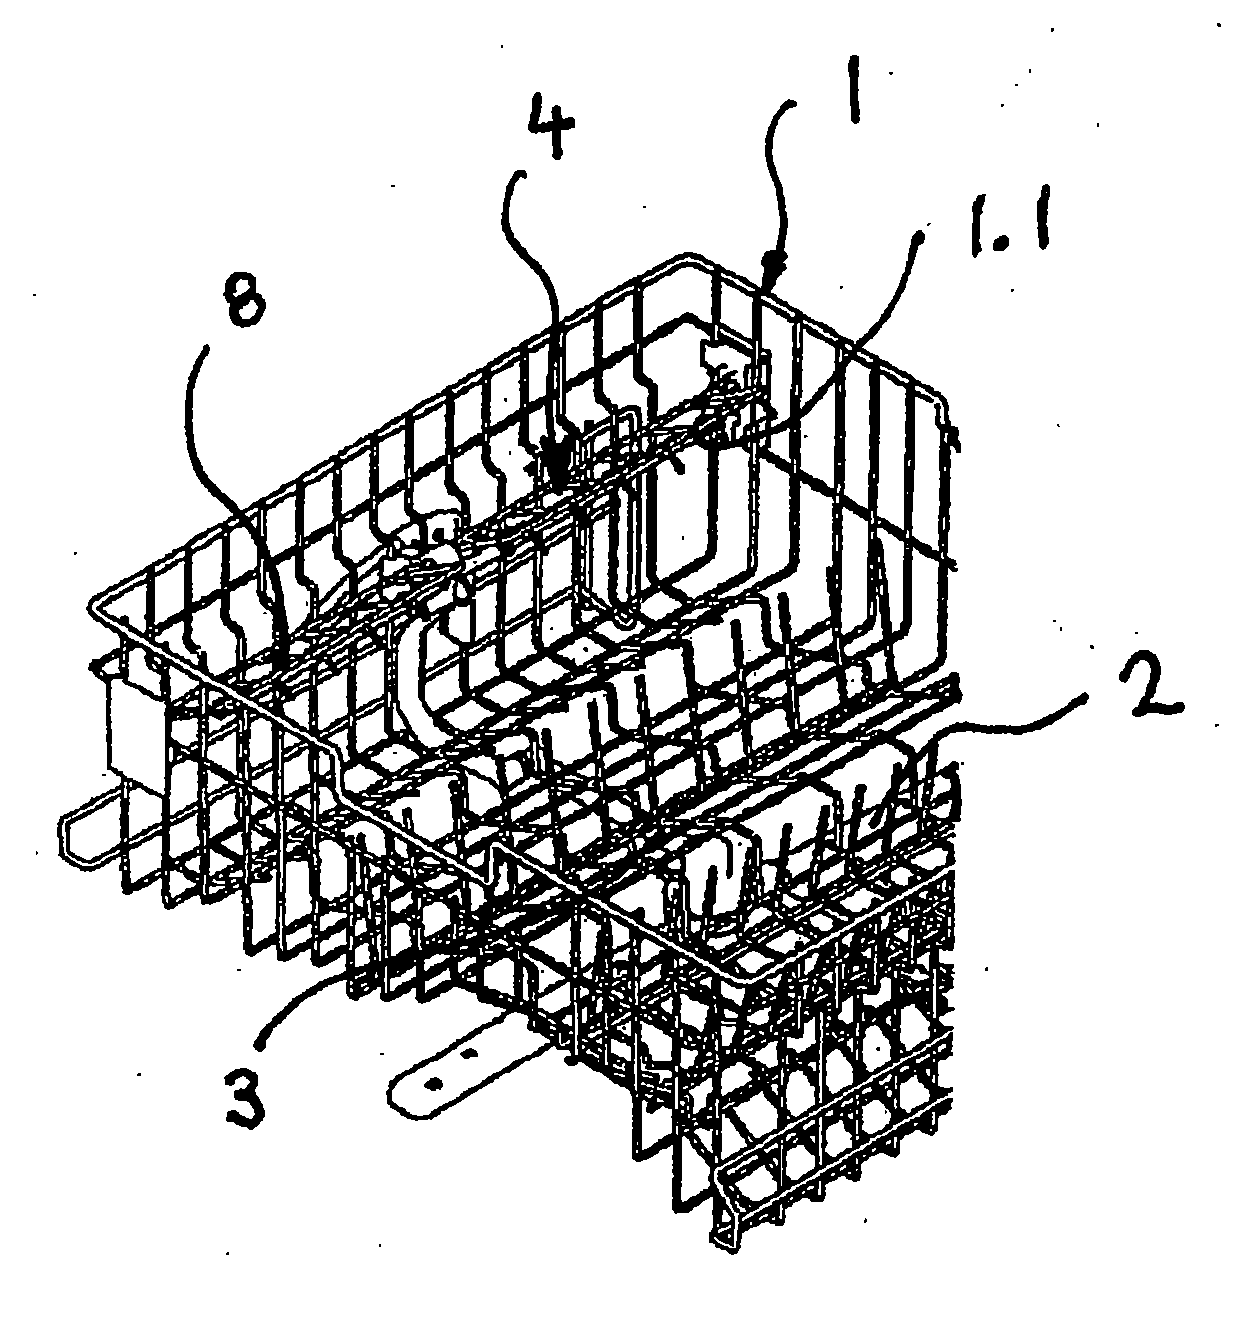 Crockery basket for a dishwasher machine, comprising an intensive washing zone